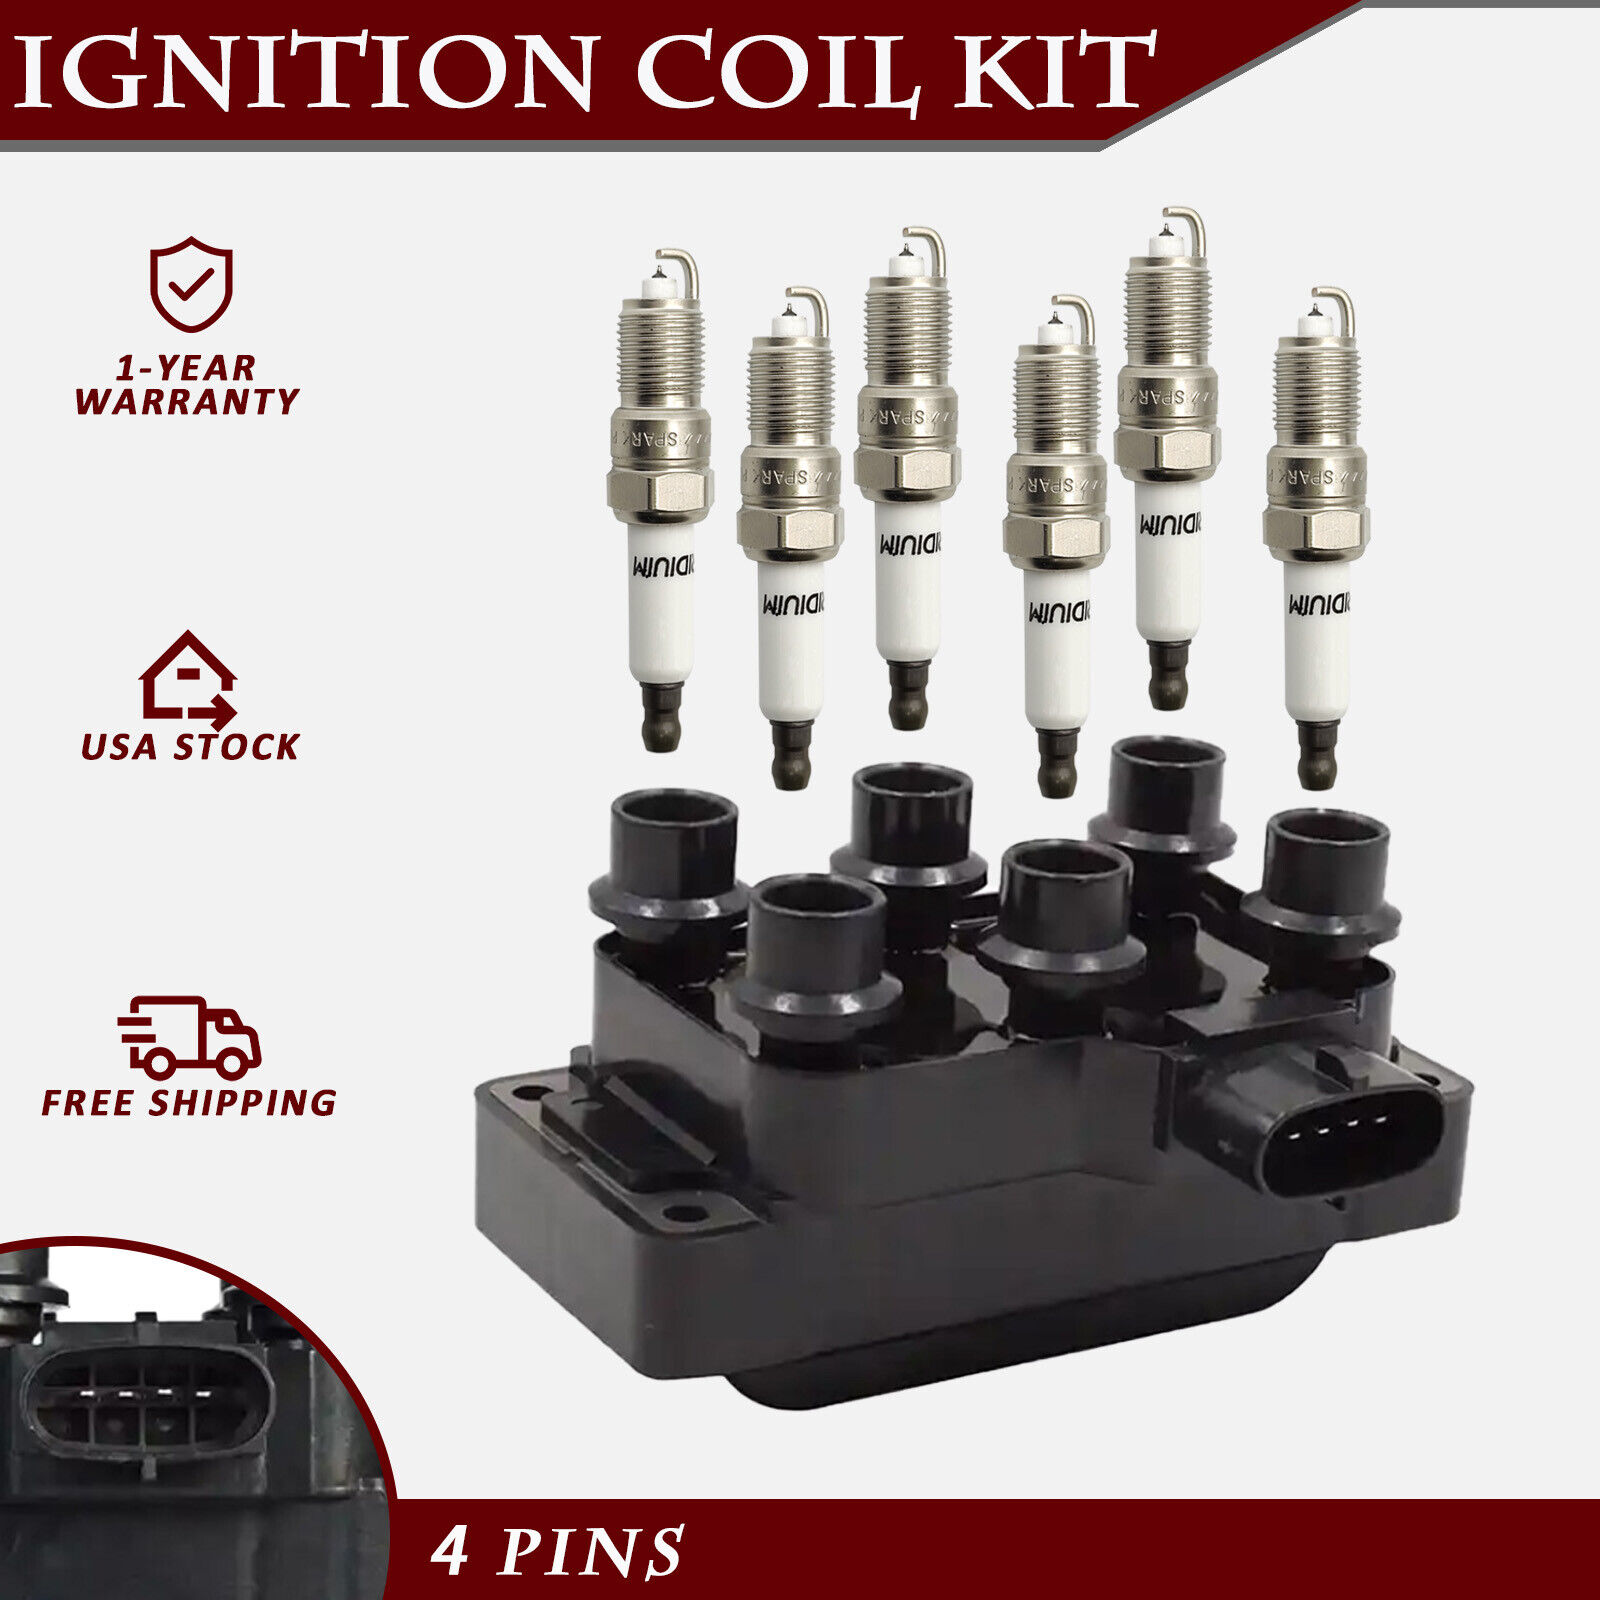 1X Ignition Coil & 6X Iridium Spark Plug Set for Ford Mercury Mazda 1990-2010